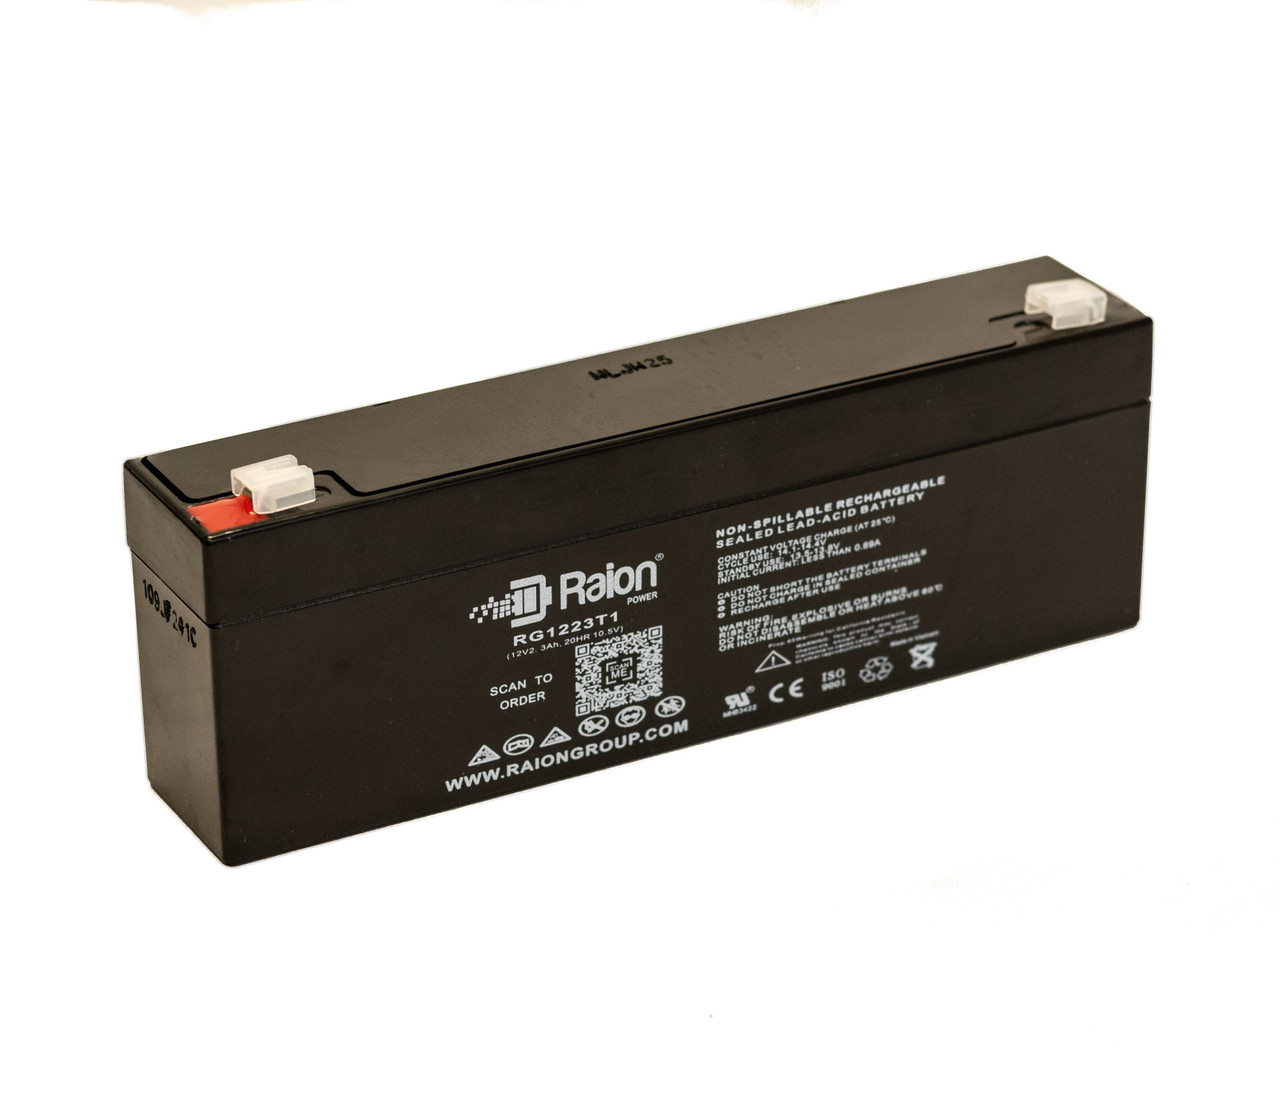 Raion Power RG1223T1 Replacement Battery for Unikor VT1202